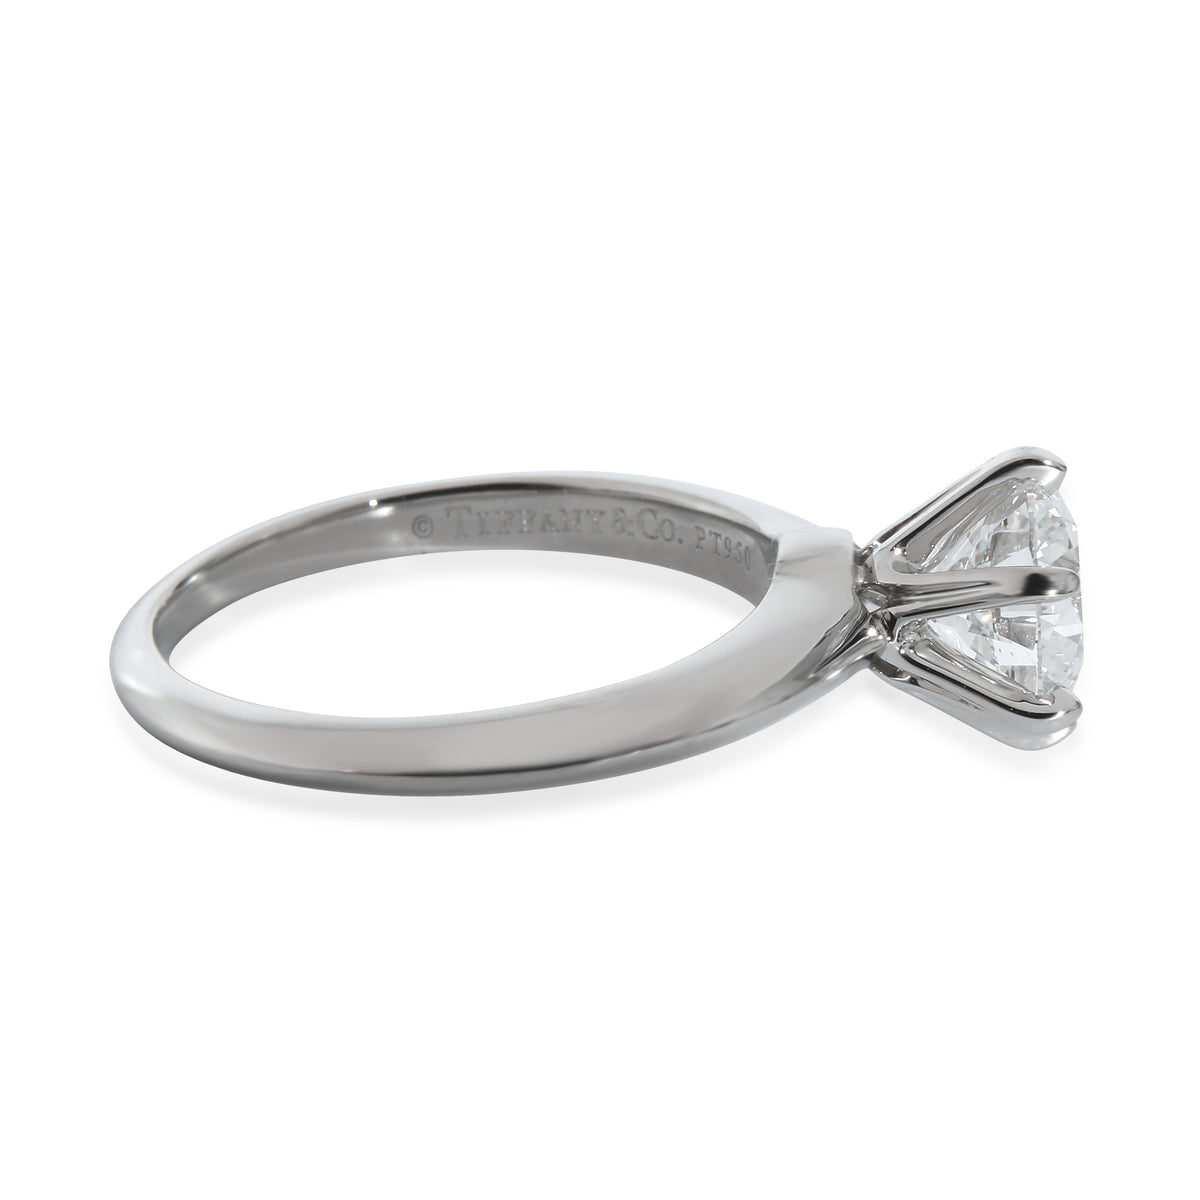 Tiffany & Co. Diamond Engagement Ring in  Platinum E VS2 1.29 CTW